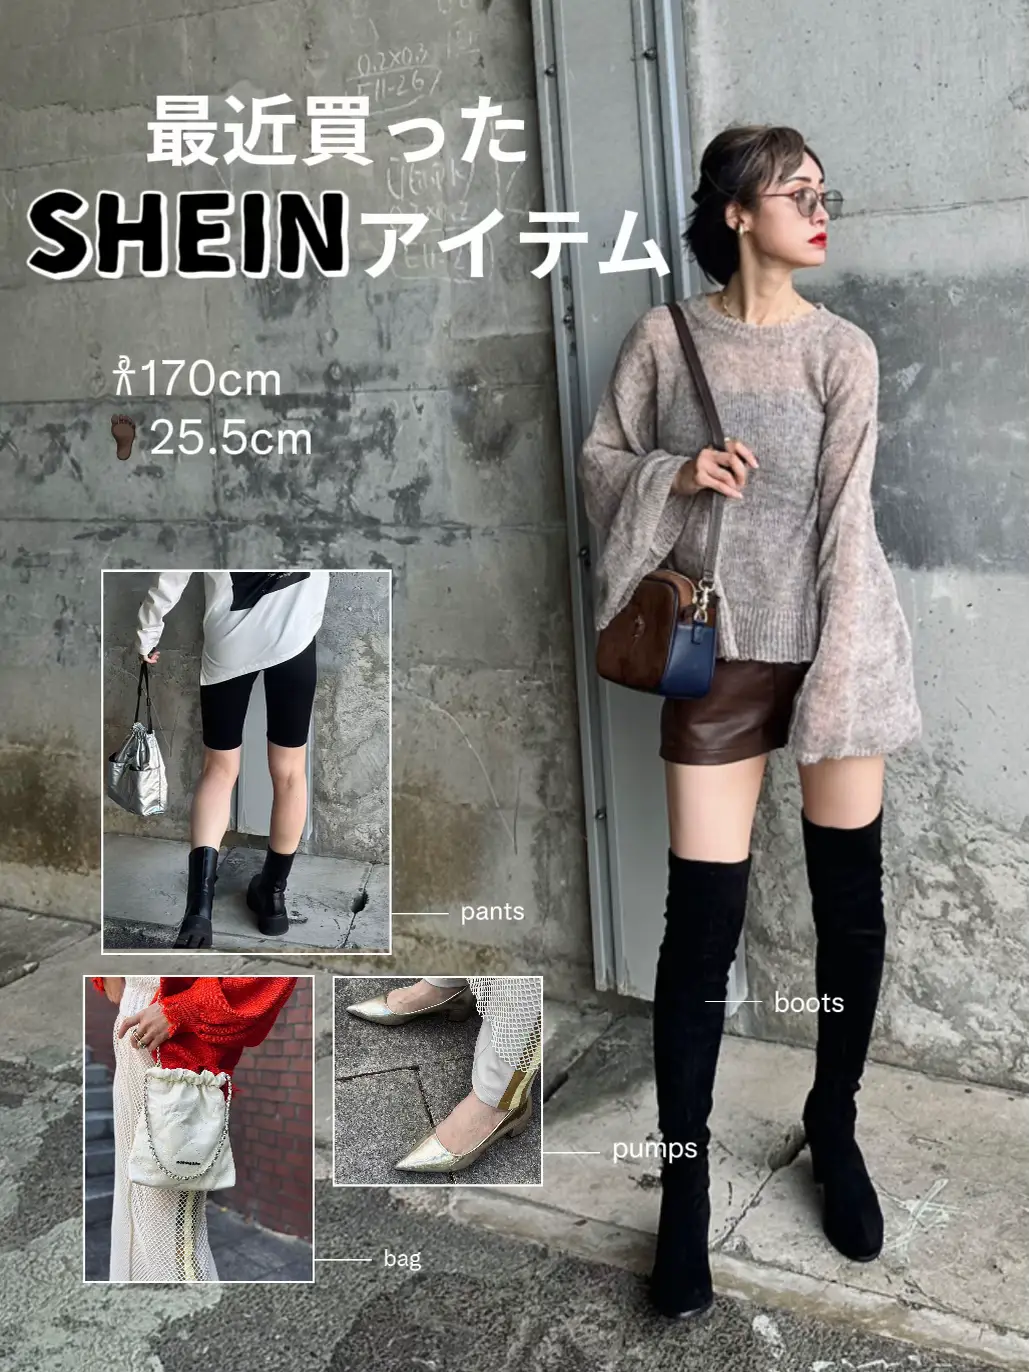 SHEIN 厚底 ブーツ 22cm - 靴